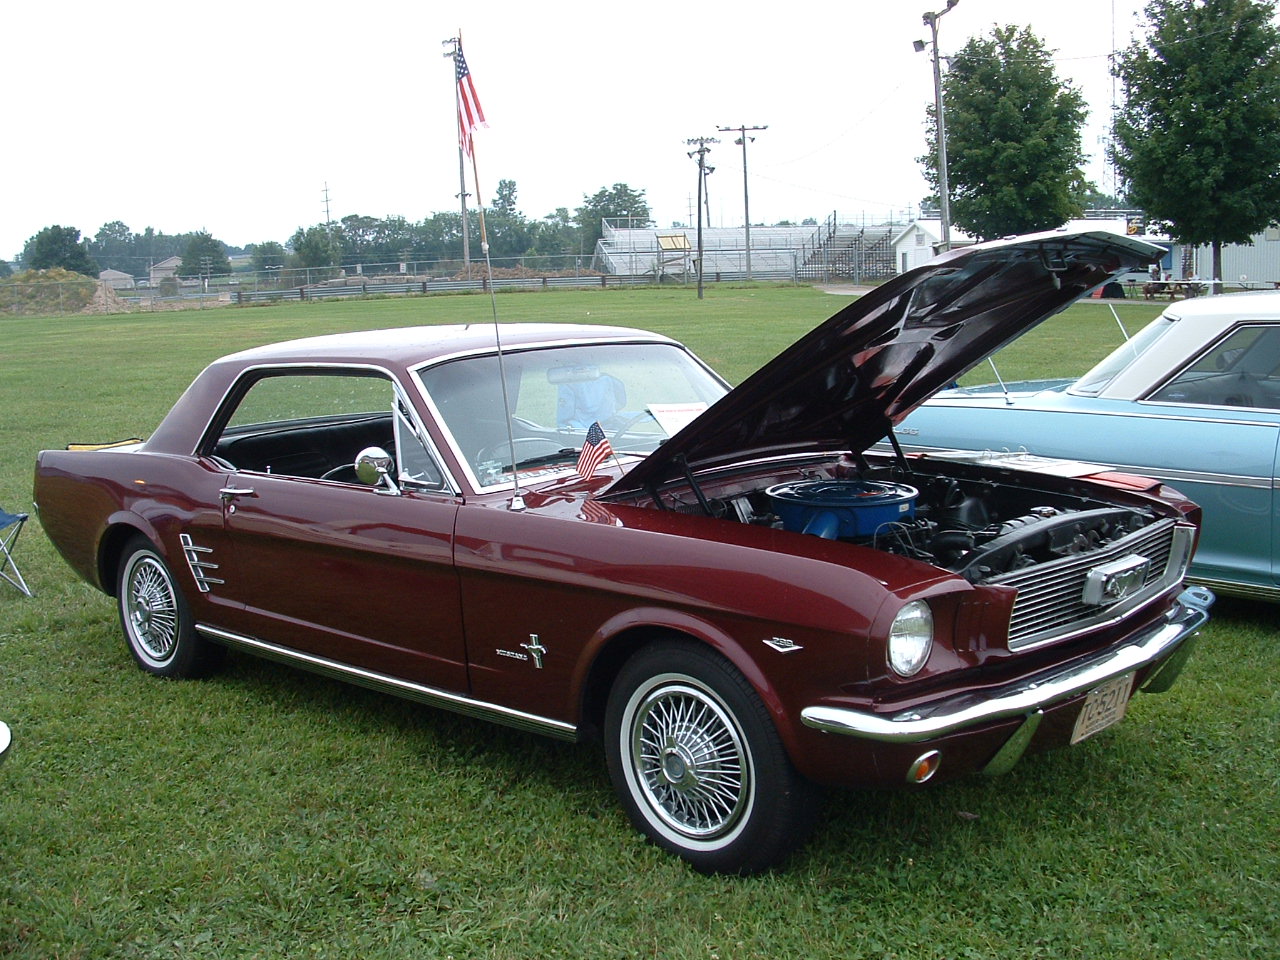 John brought this 1966 Mustang